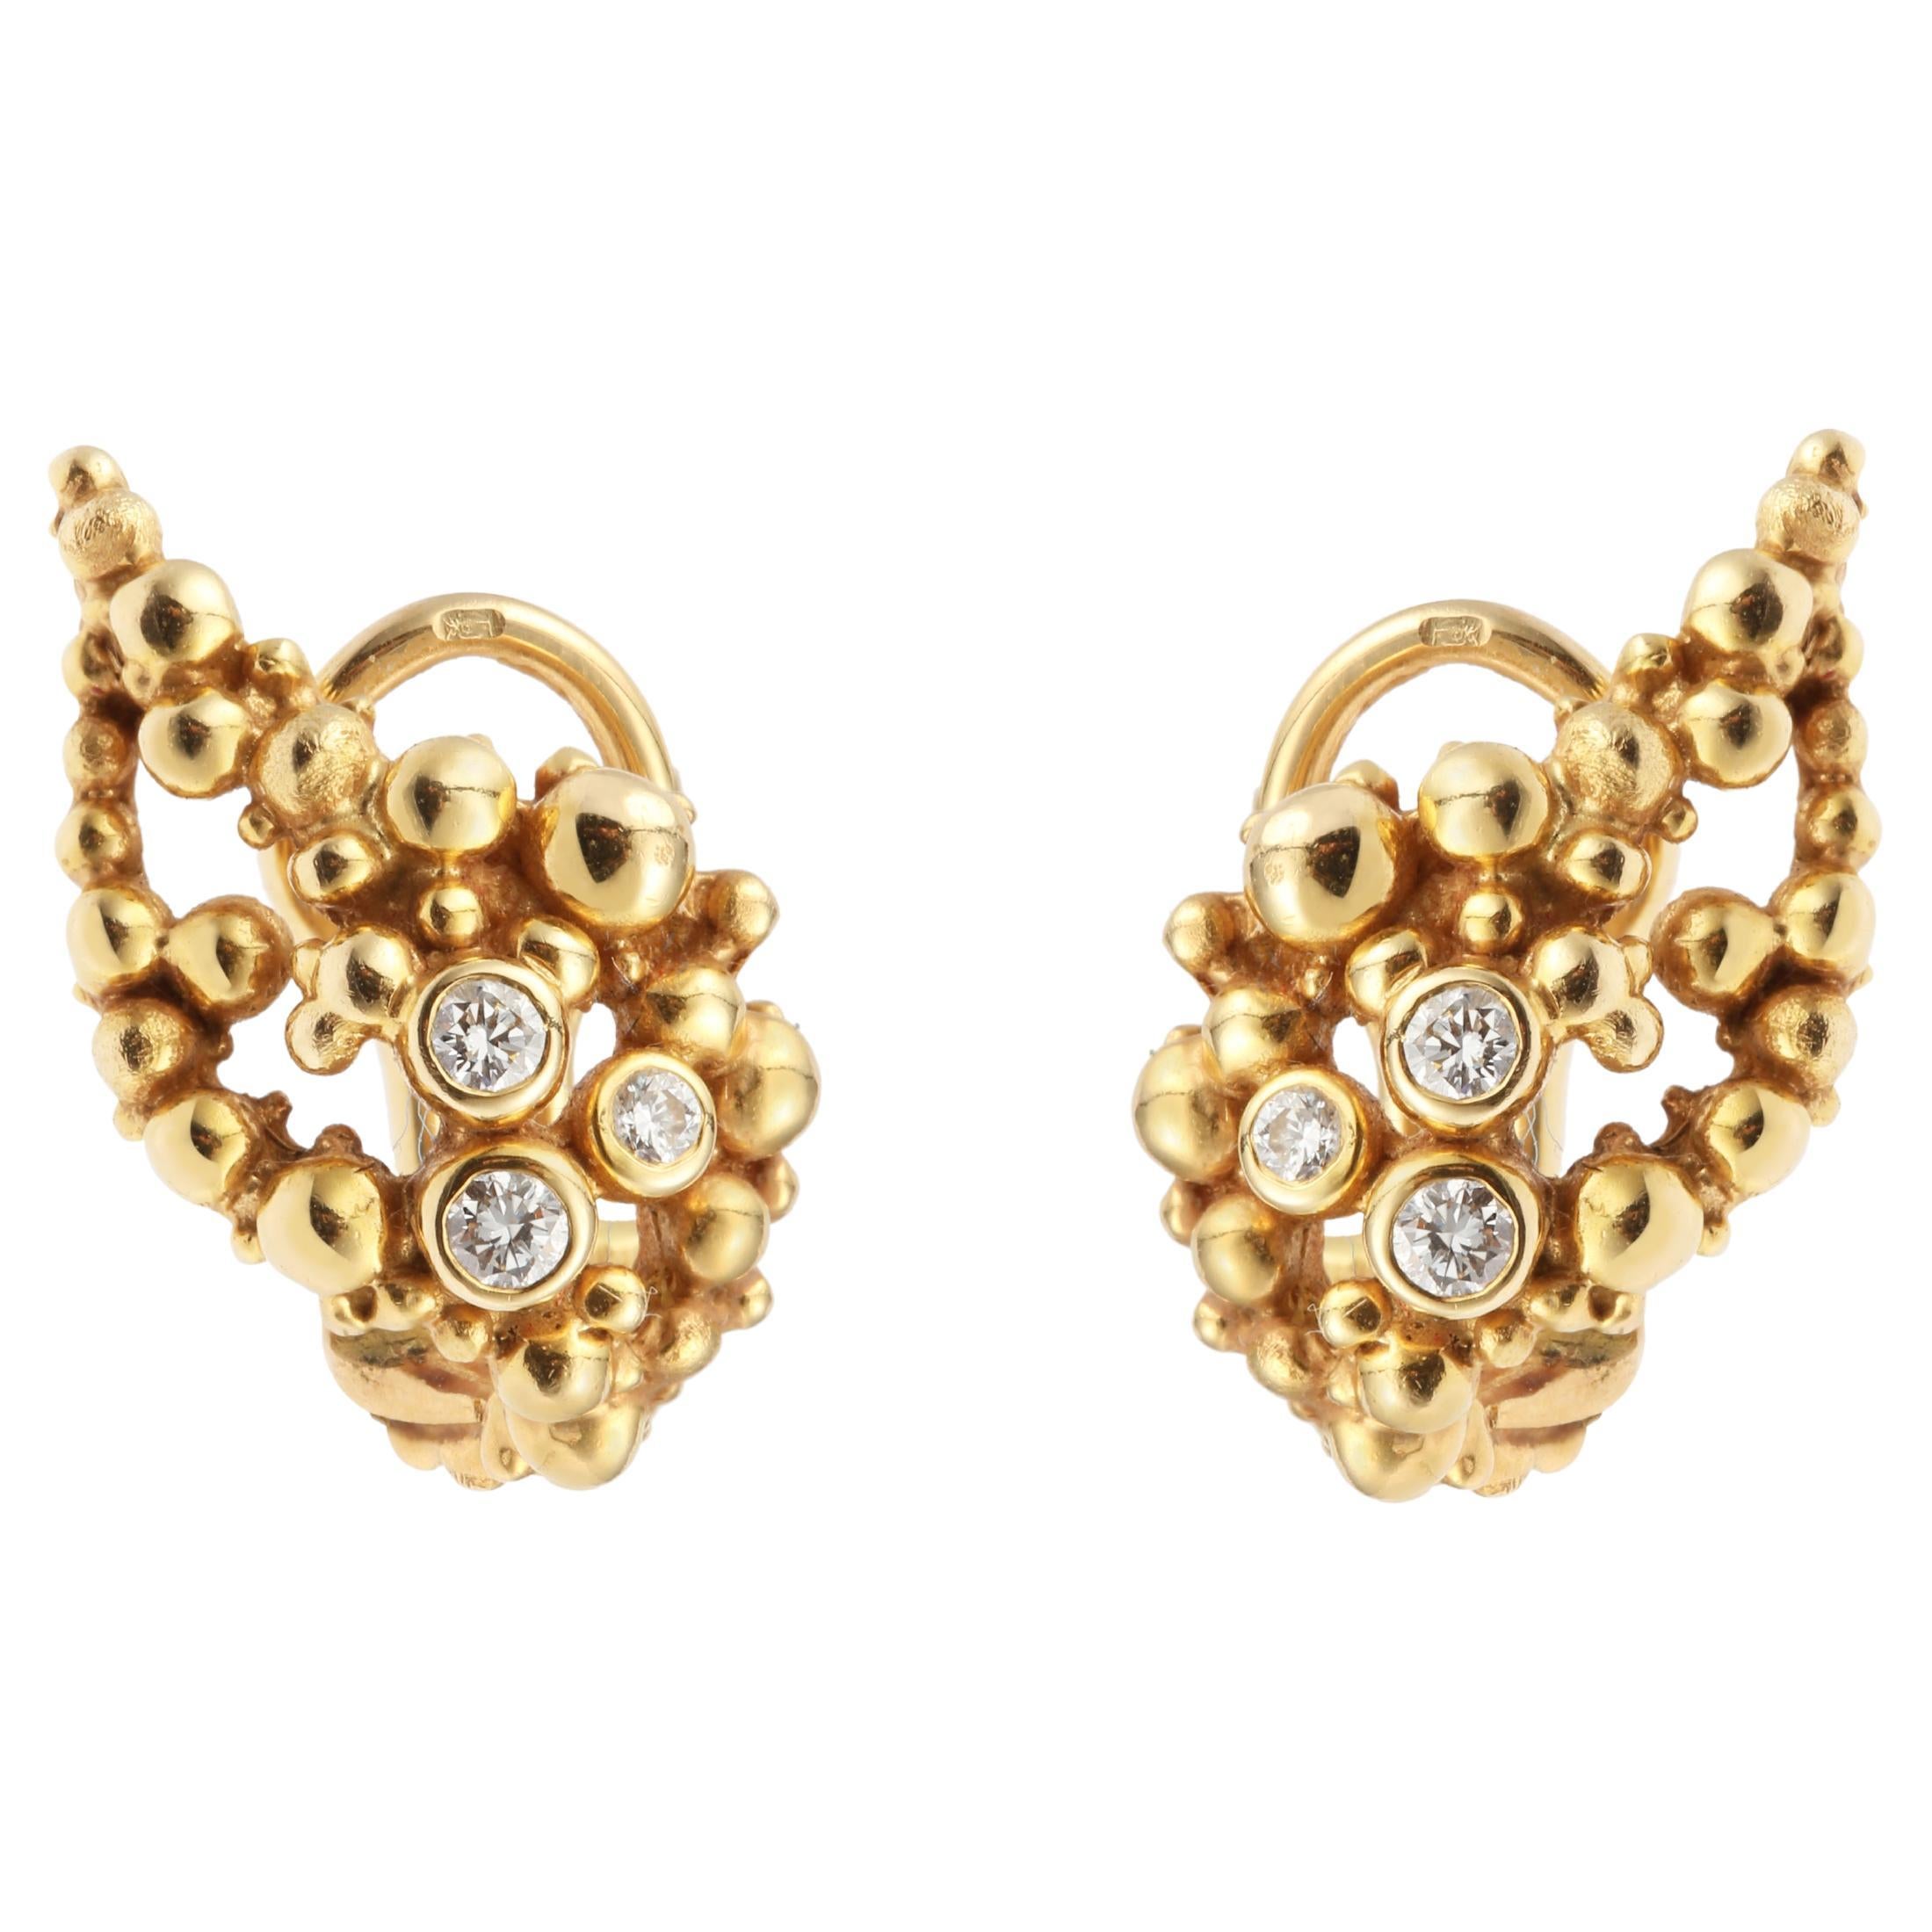 Gilbert Albert Diamonds 18 Carat Yellow Gold Grape Earrings